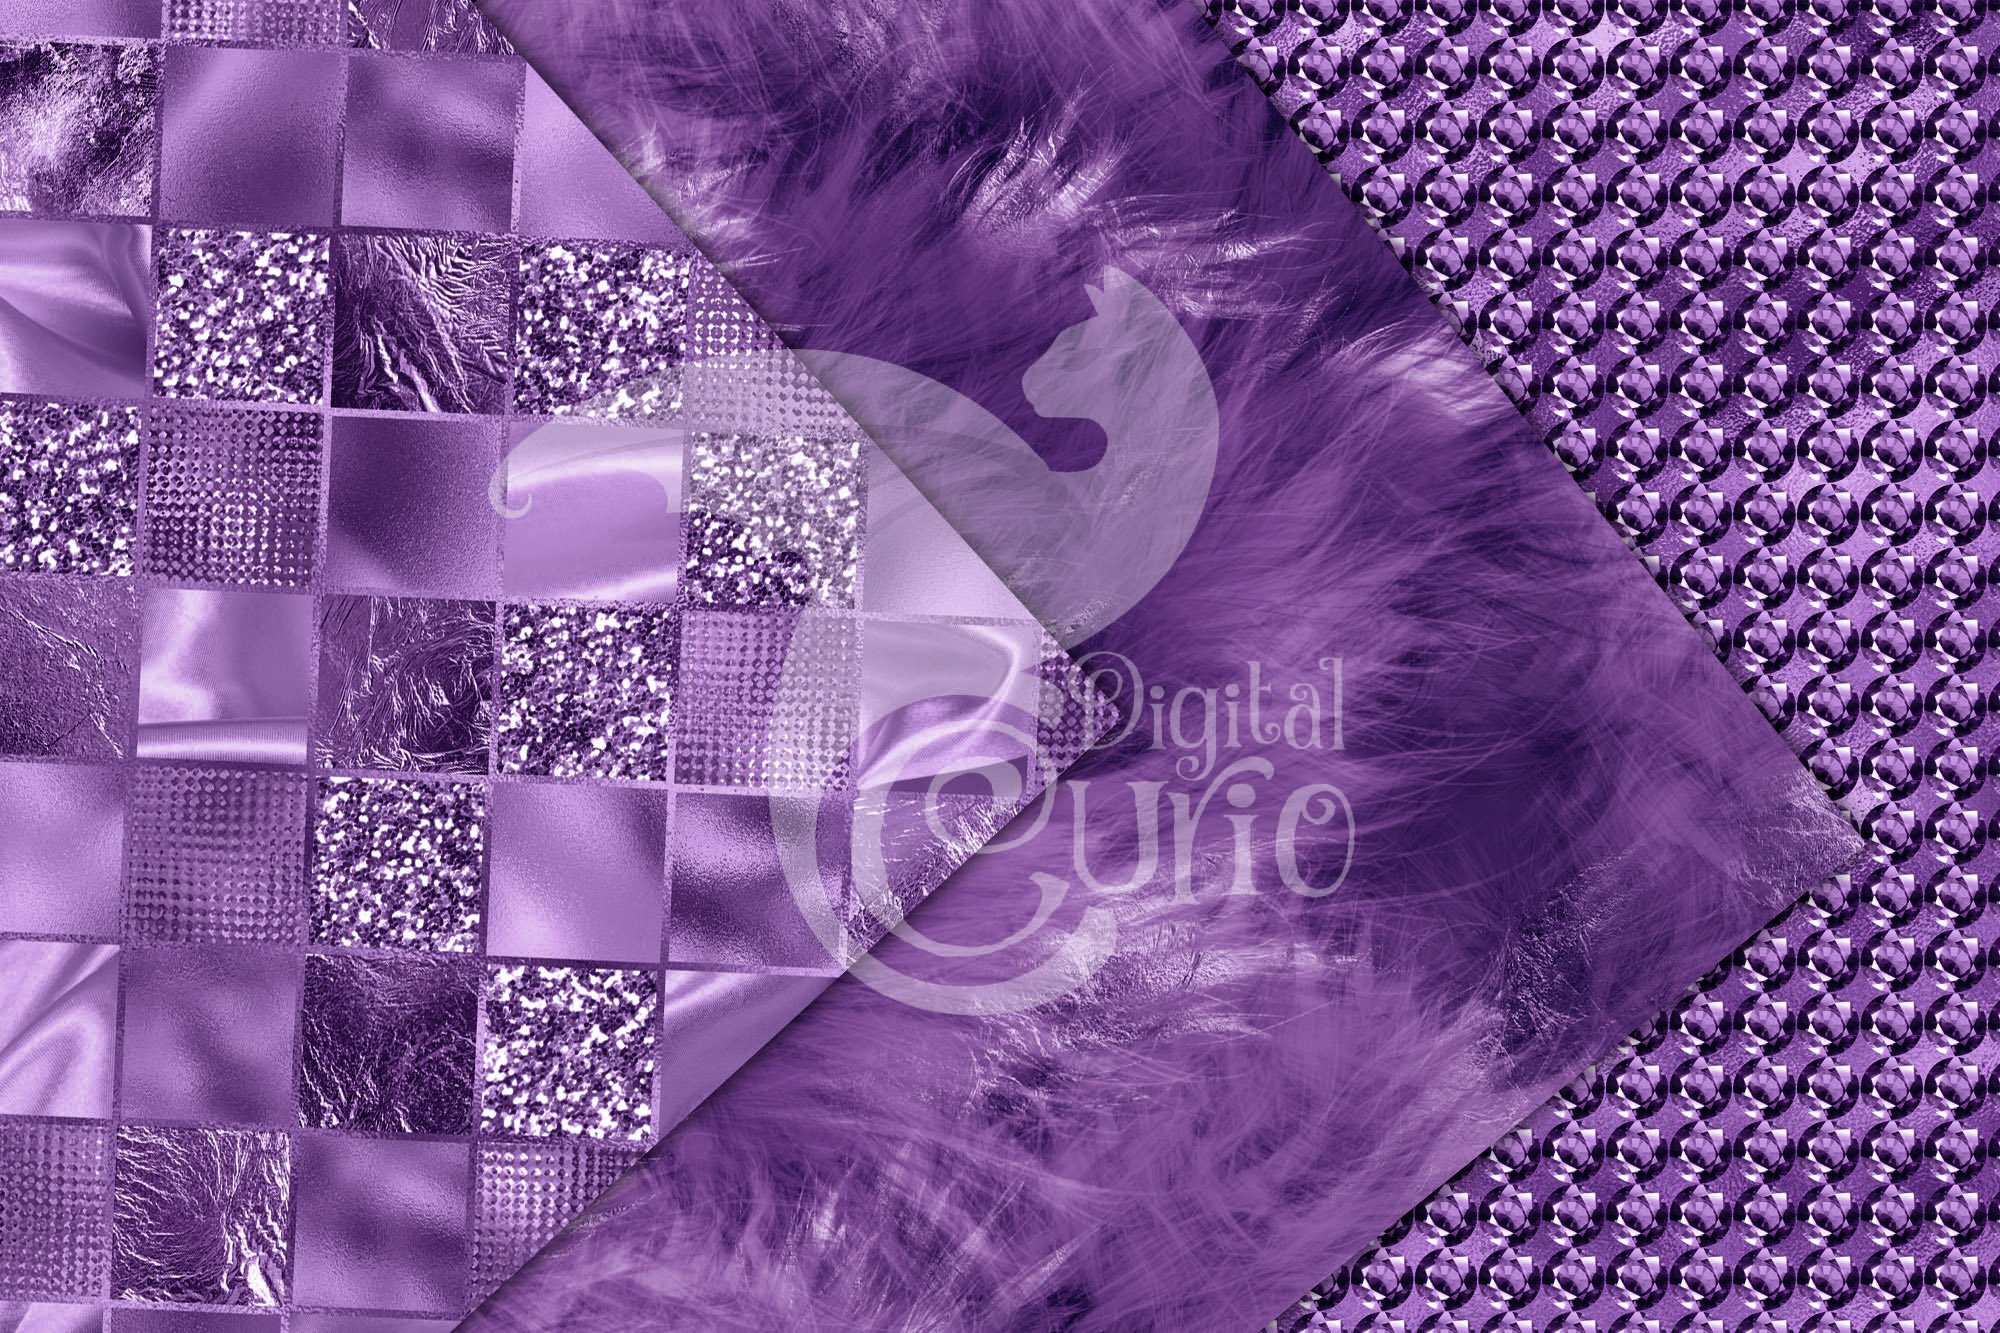 luxury lavender 2 digital paper preview 4 662